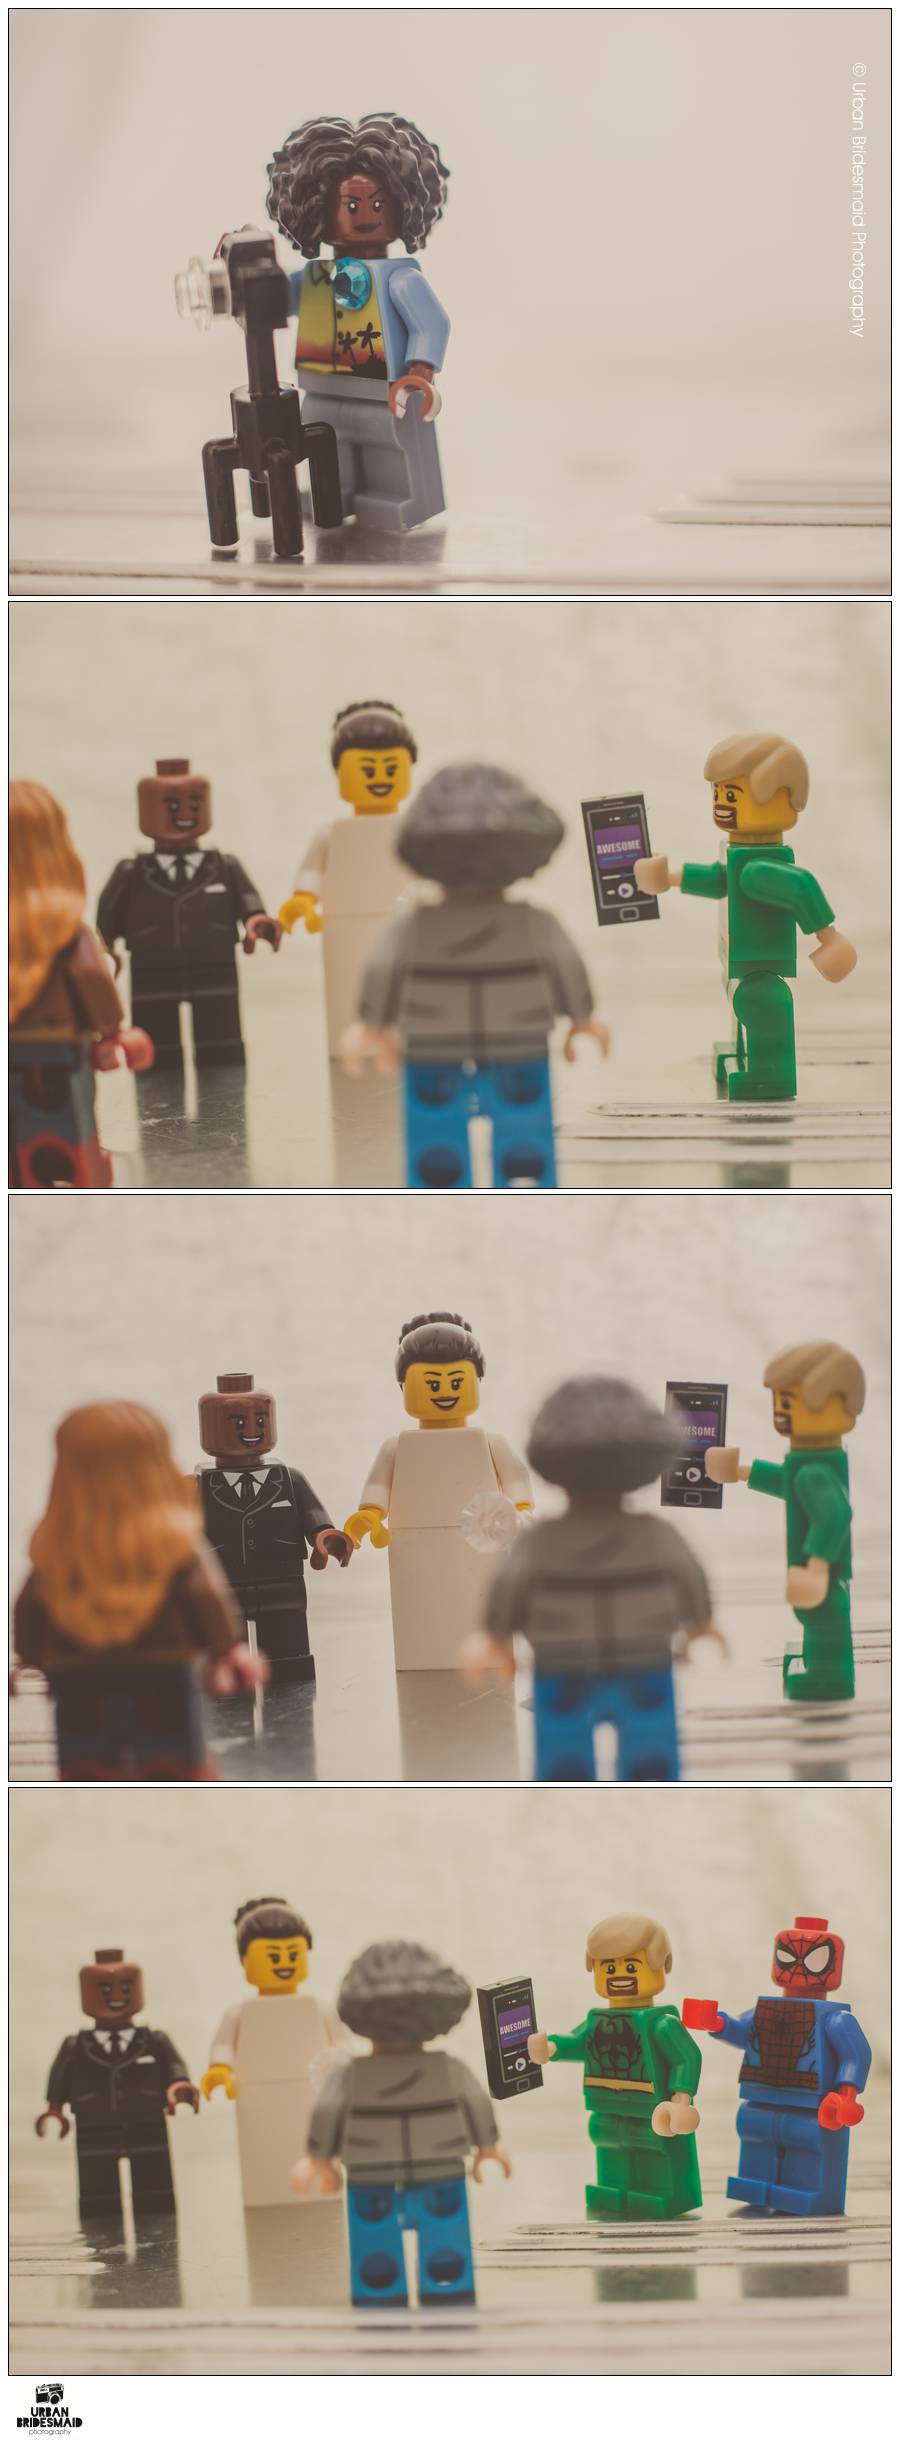 05-Lego-Minifig-Jessica-Jones-Luke-Cage-wedding-London-Urban-Bridesmaid-Photography-1 Superhero Destination Wedding with Lego figures and minifigs